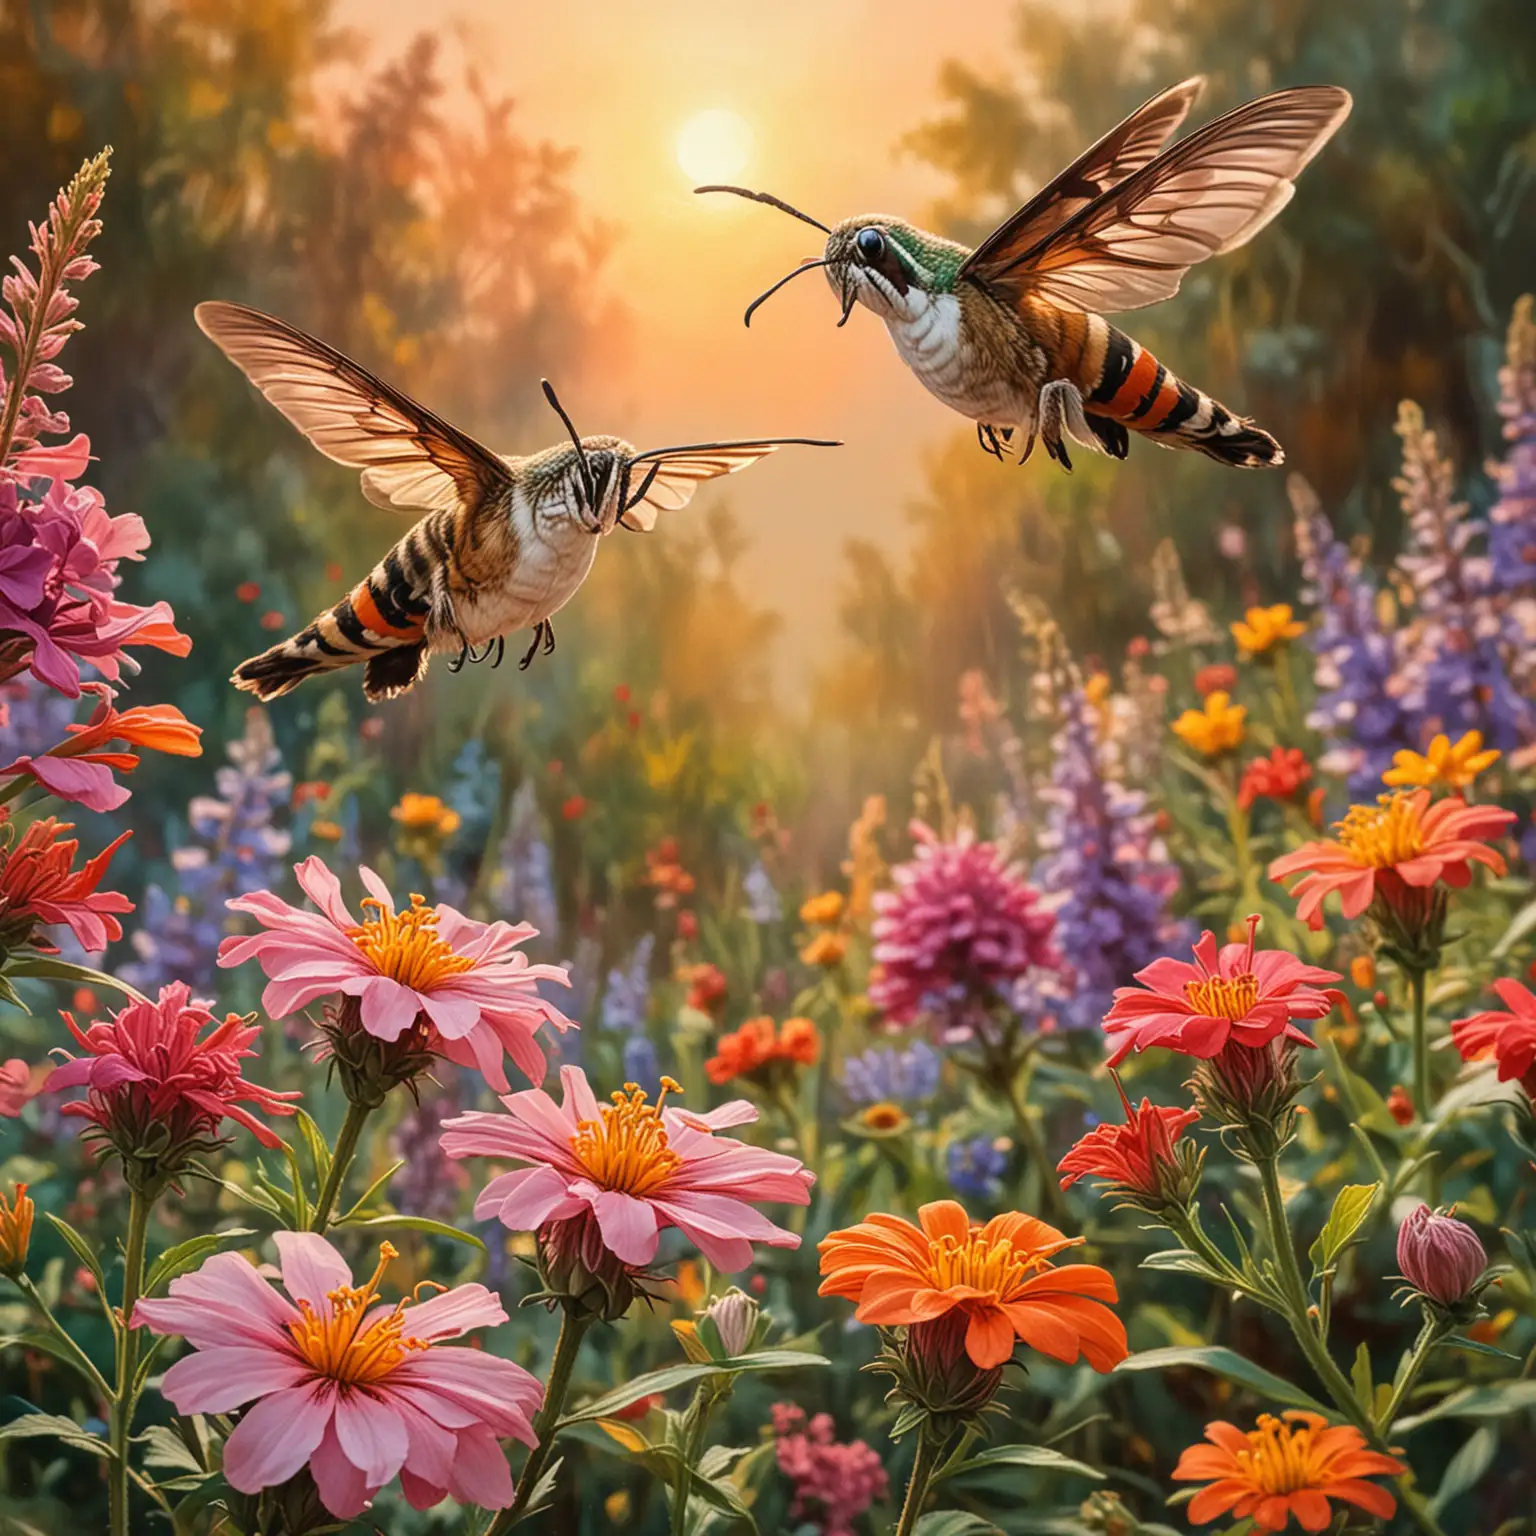 Hummingbird Moth Flying near Four OClock Flower in Colorful Garden at Sunset